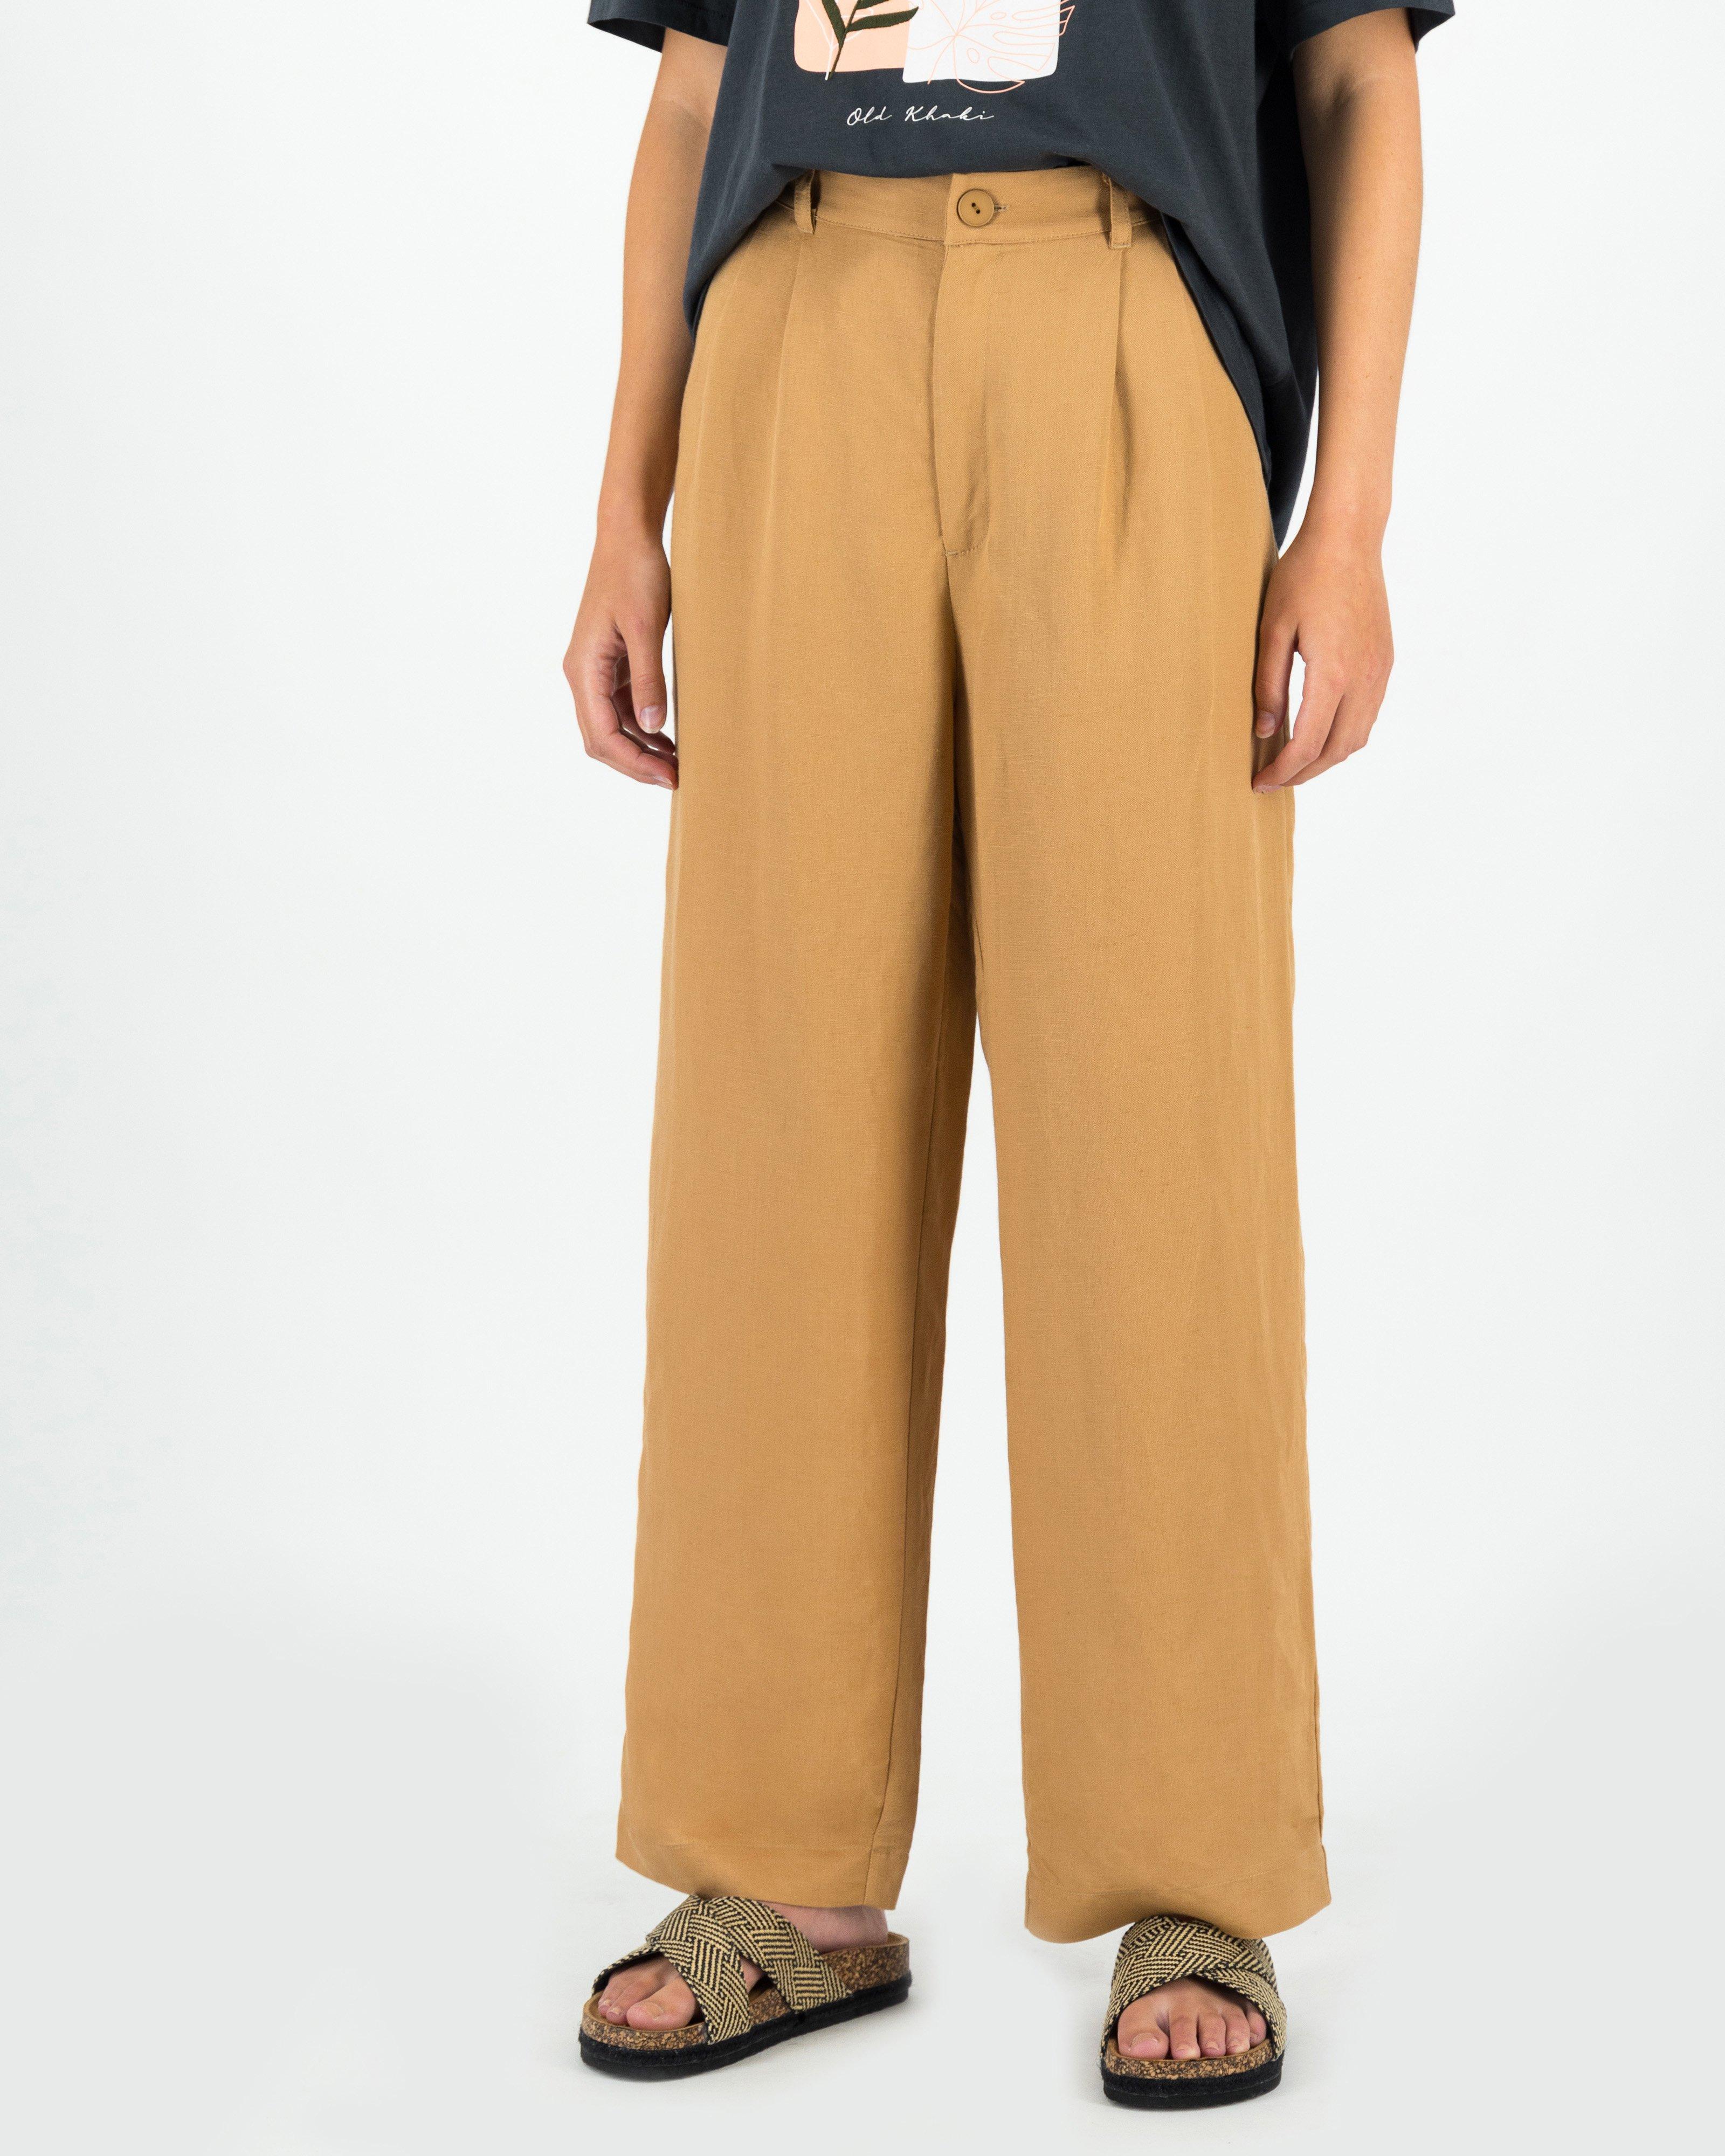  Women’s Priya Pleated Linen Pants  -  Camel